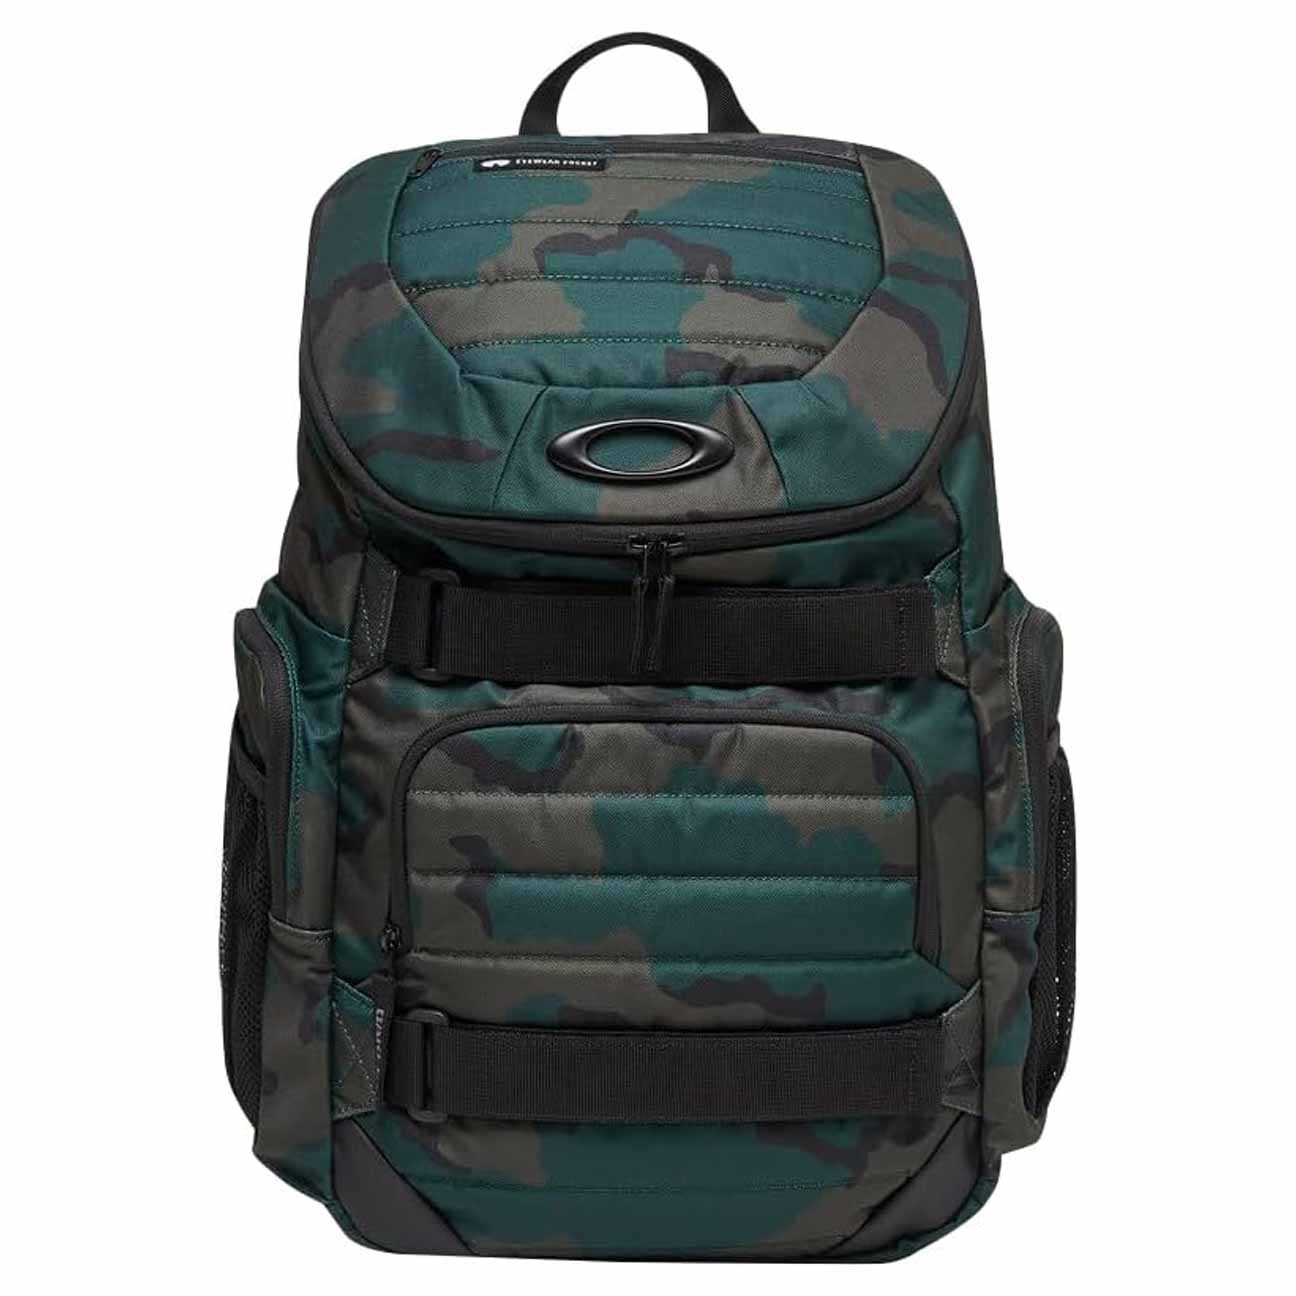 Oakley Enduro 3.0 Big Backpack in a camouflage design 